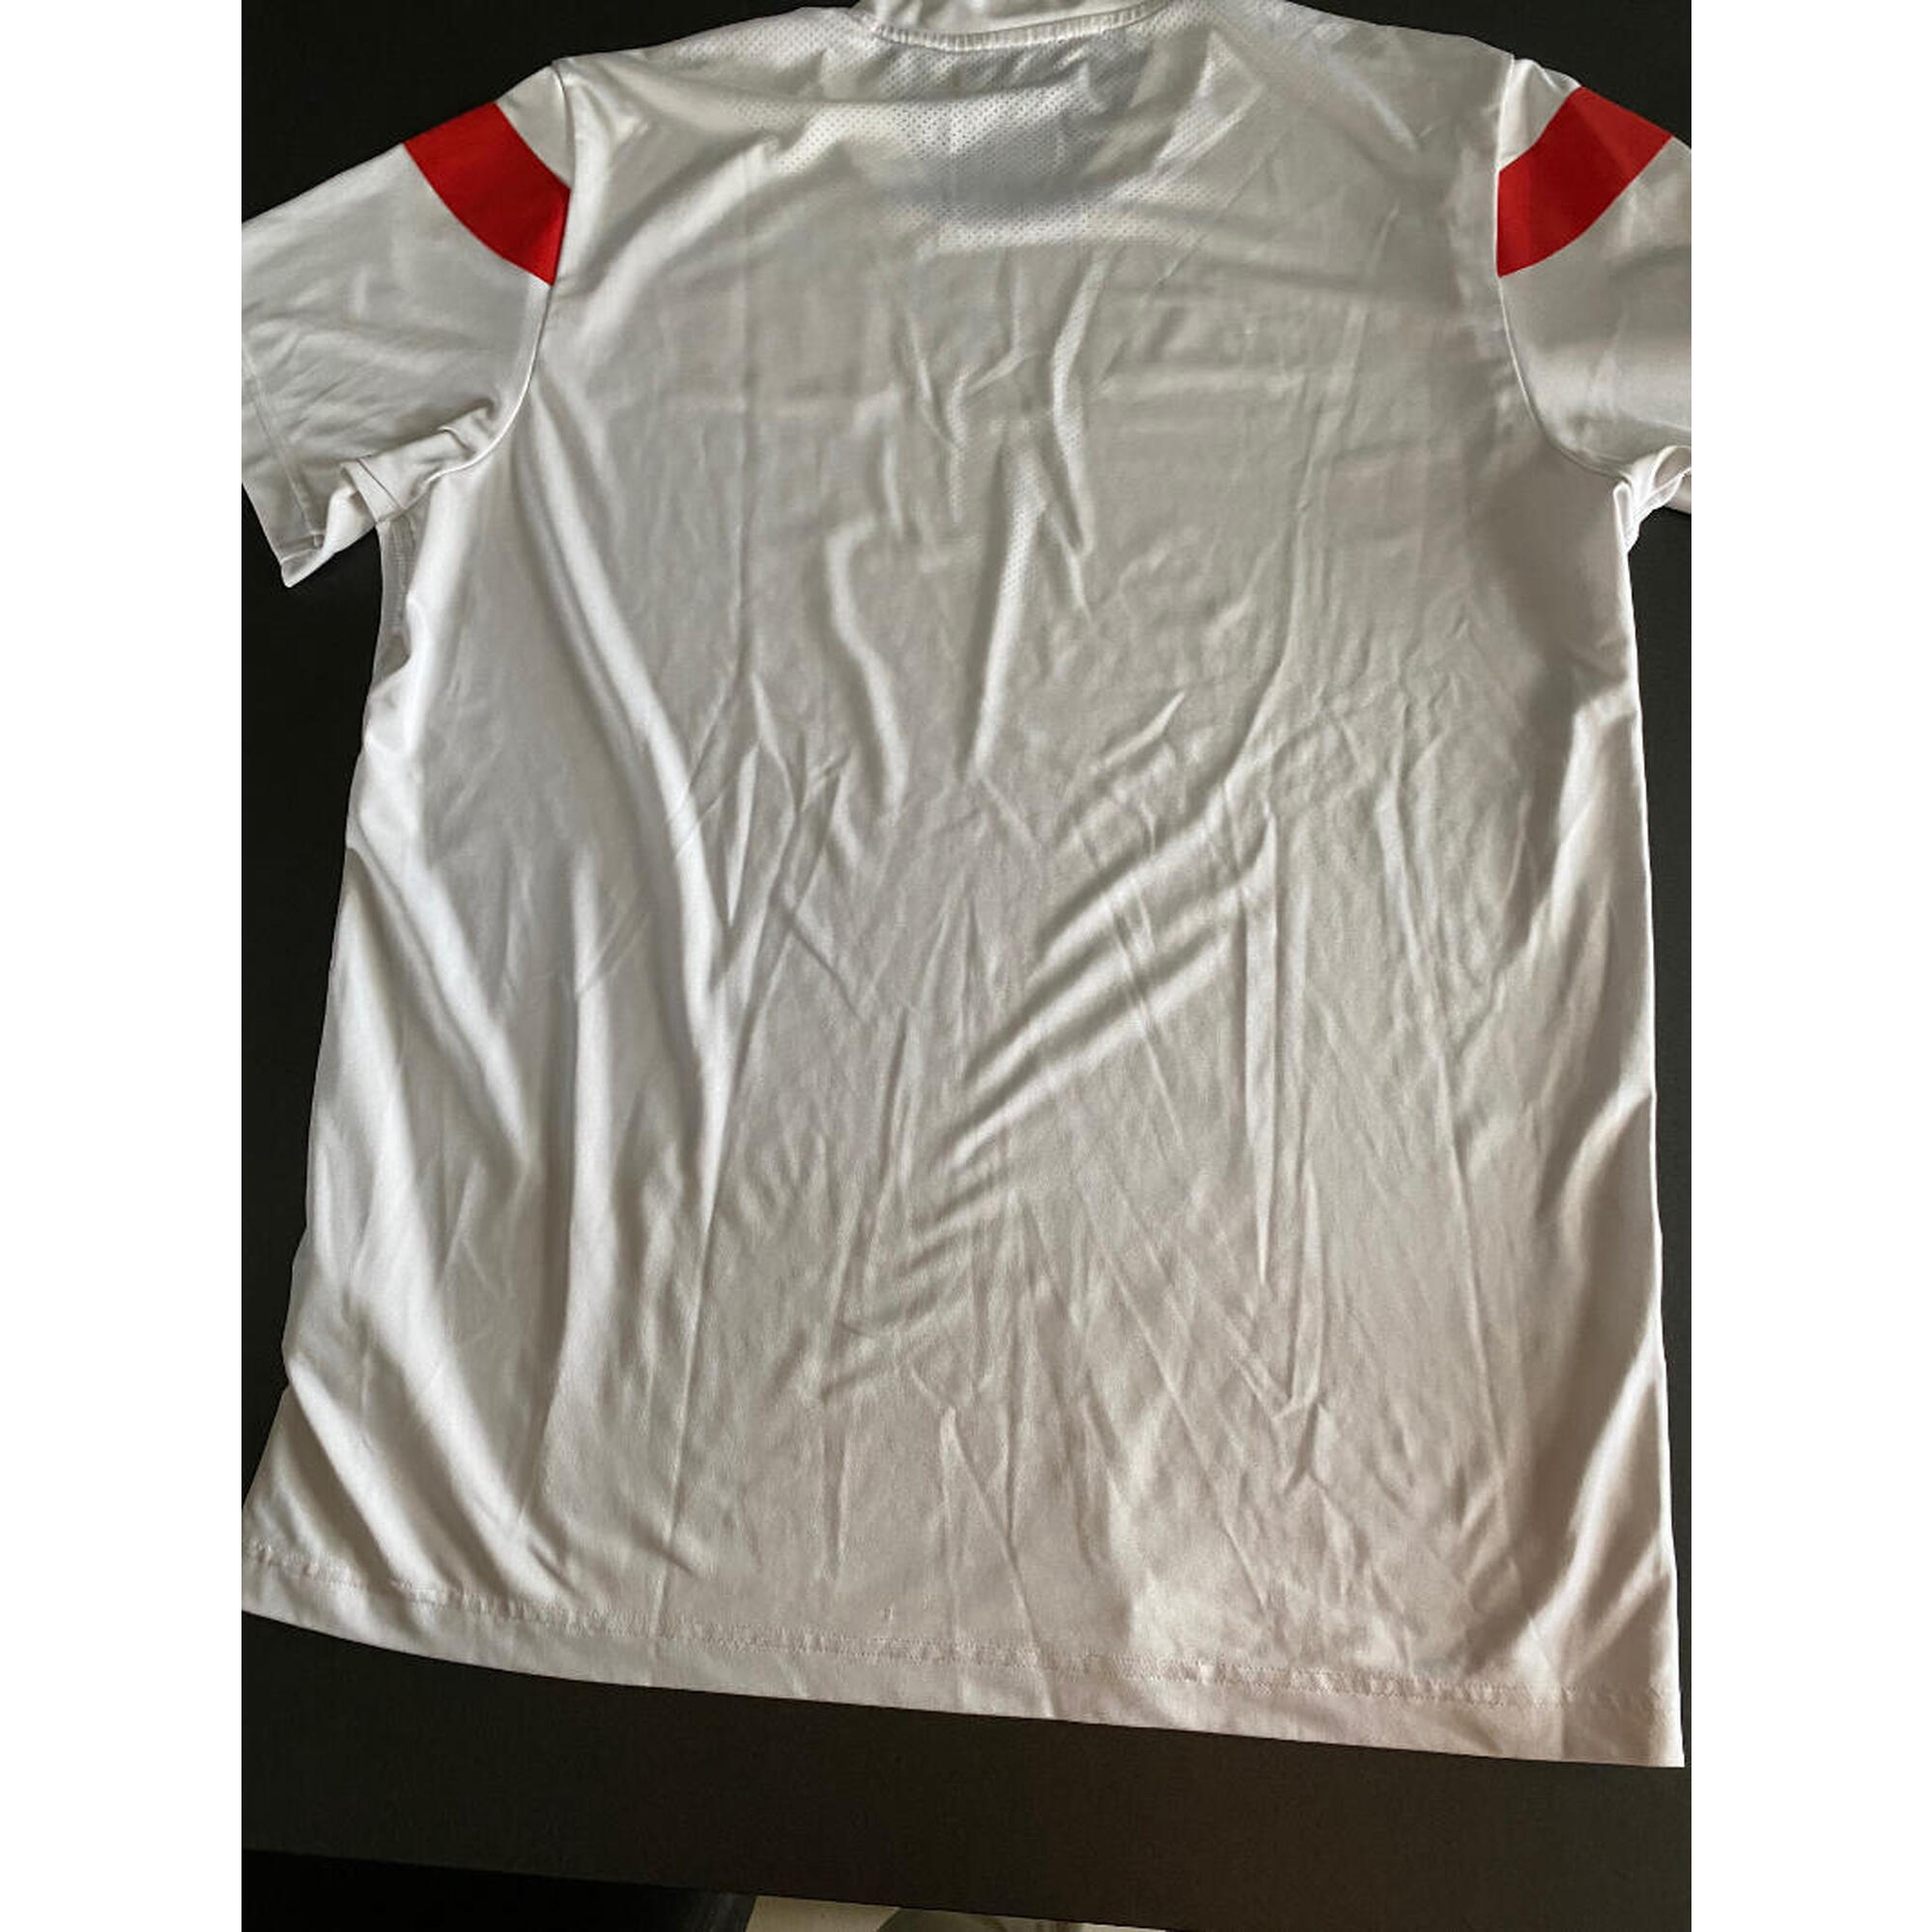 C2C - T shirt de tennis Adidas BLANC